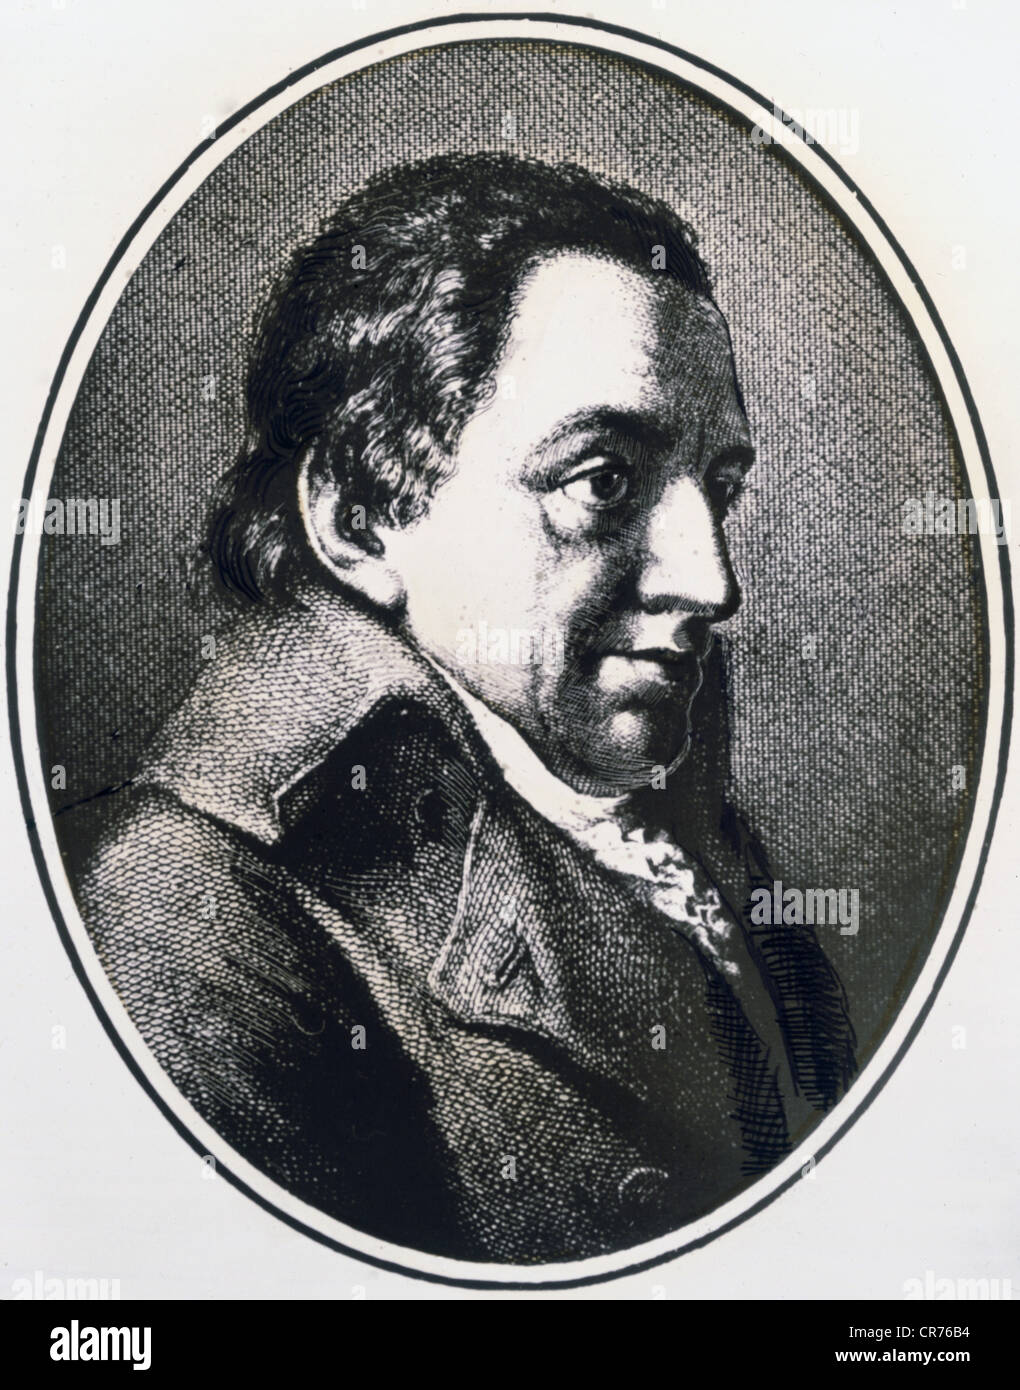 Fichte, Johann Gottlieb, 19.5.1762 - 29.1.1814, German philosopher, portrait, wood engraving, 19th century, private collection, , Stock Photo